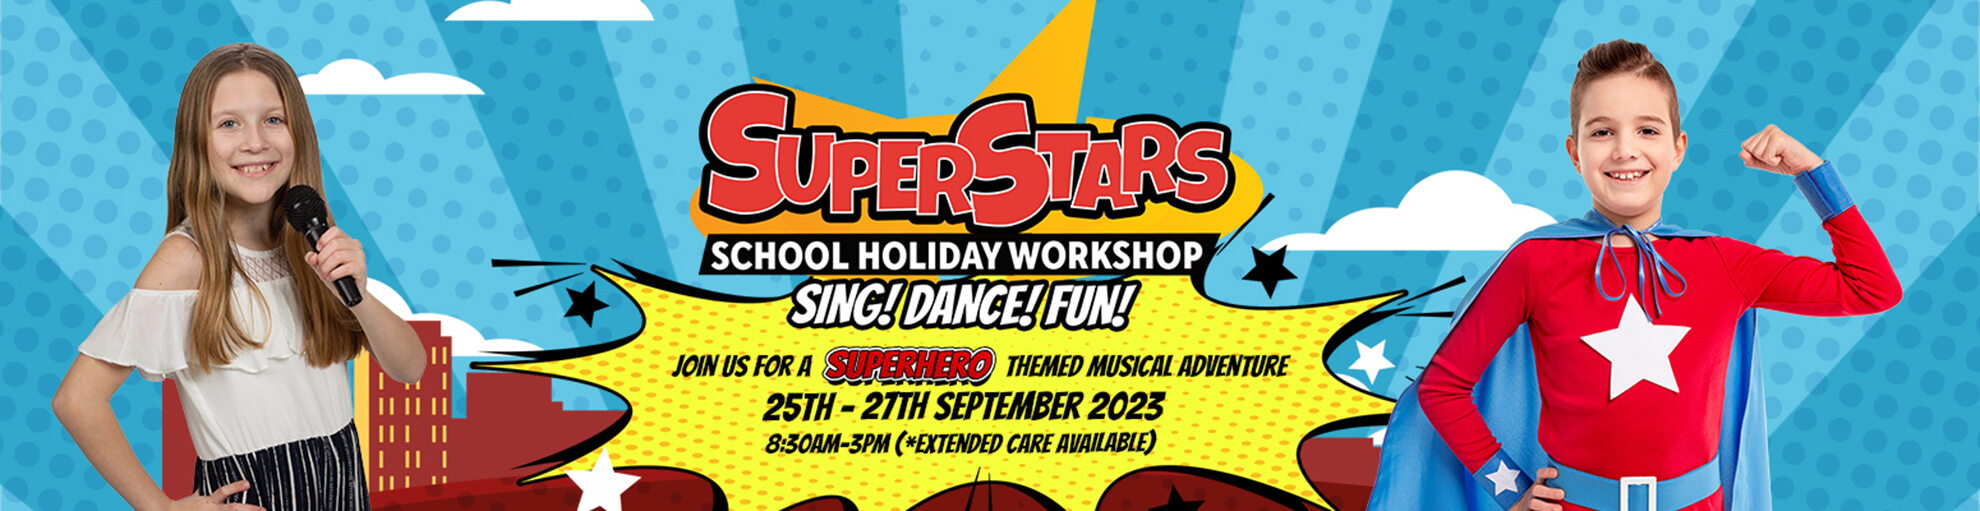 What is the Superheroes School Holiday Workshop